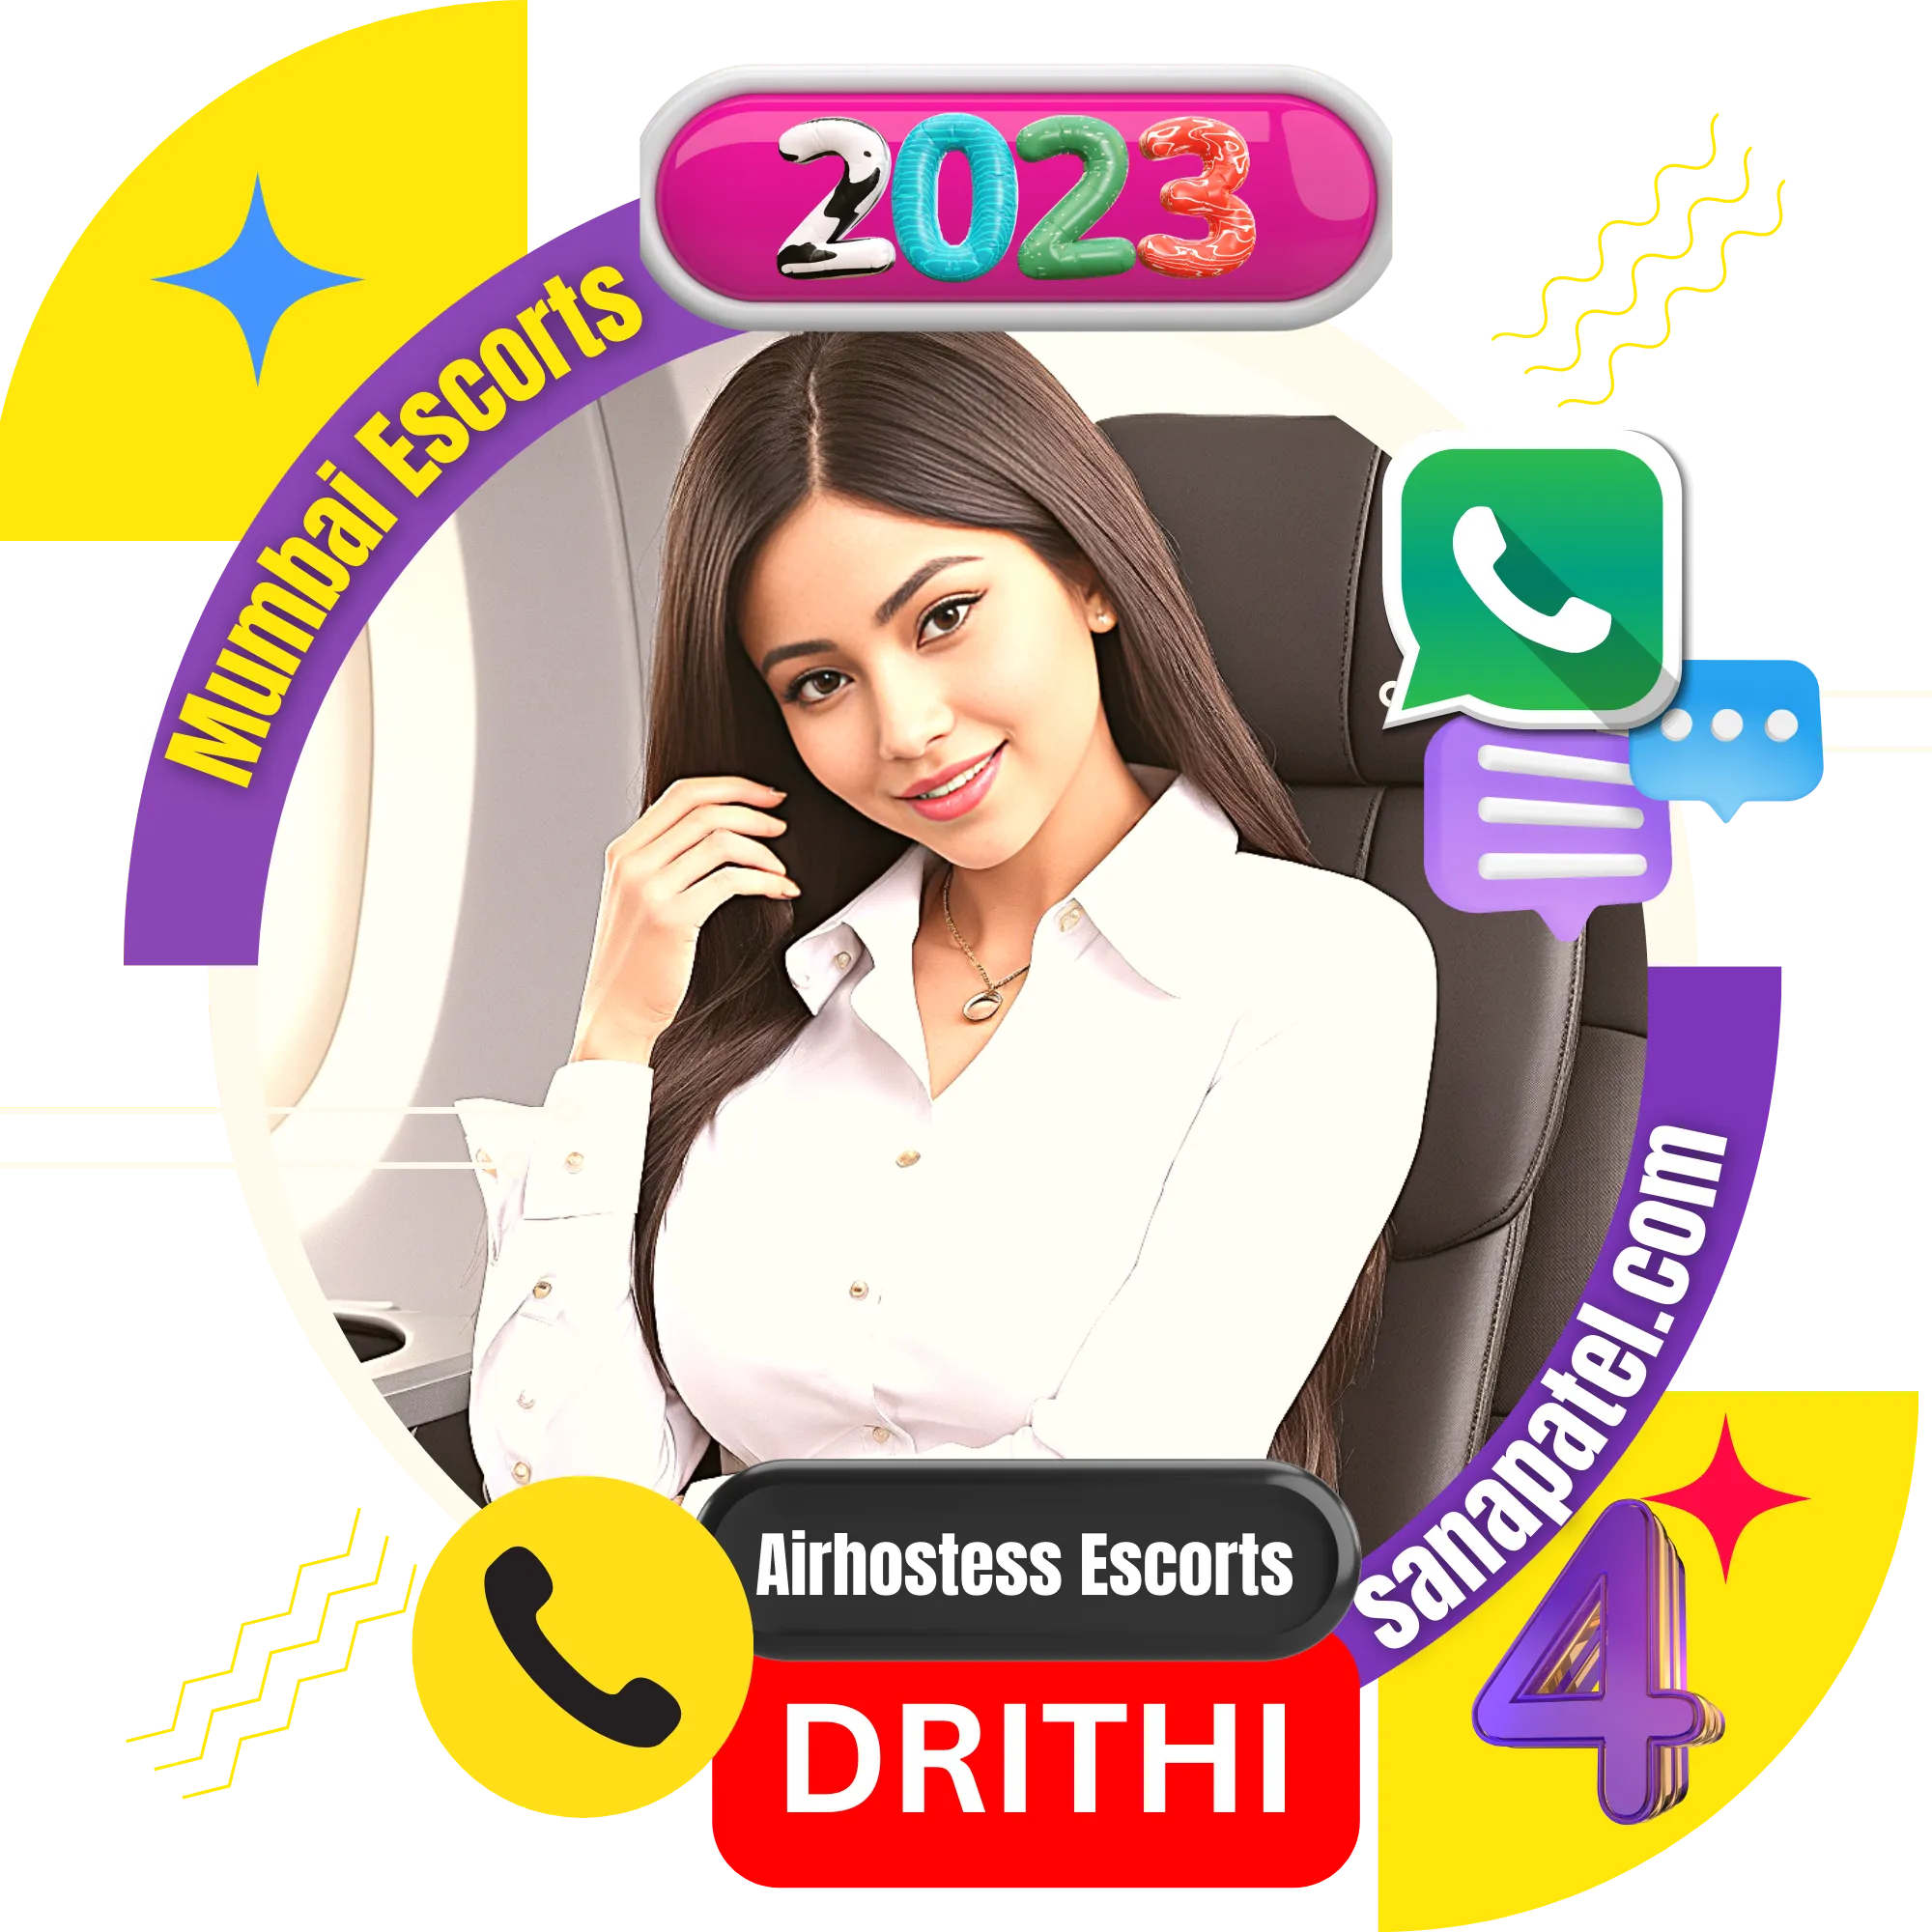 Sana Patel Mumbai Escorts Agency 4th top rated escorts in 2023 - Drithi, Air Hostess Escorts